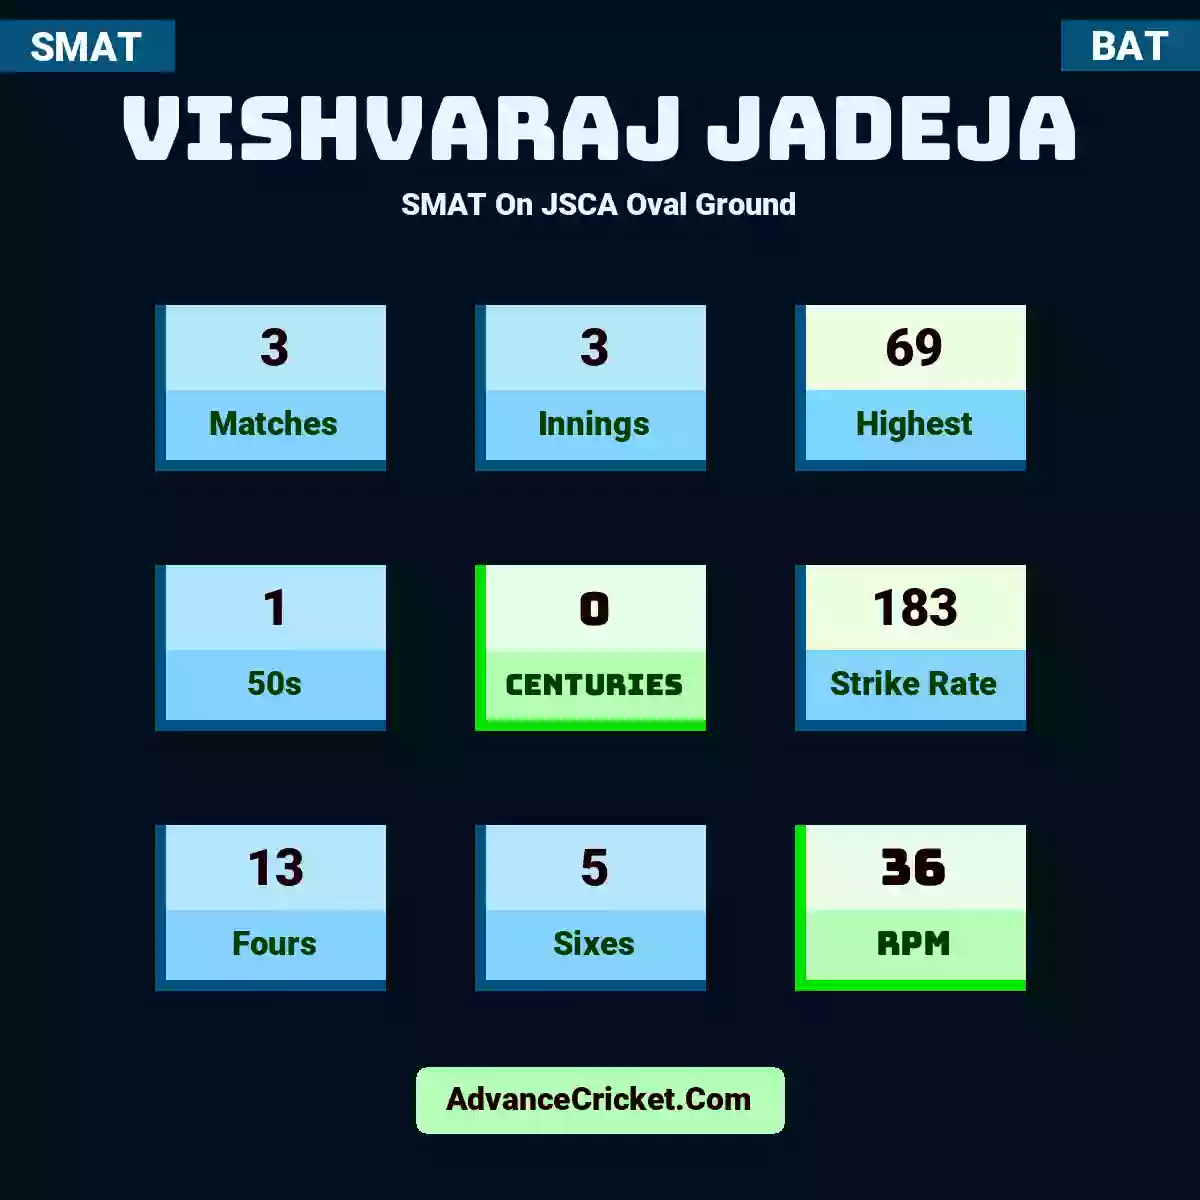 Vishvaraj Jadeja SMAT  On JSCA Oval Ground, Vishvaraj Jadeja played 3 matches, scored 69 runs as highest, 1 half-centuries, and 0 centuries, with a strike rate of 183. V.Jadeja hit 13 fours and 5 sixes, with an RPM of 36.